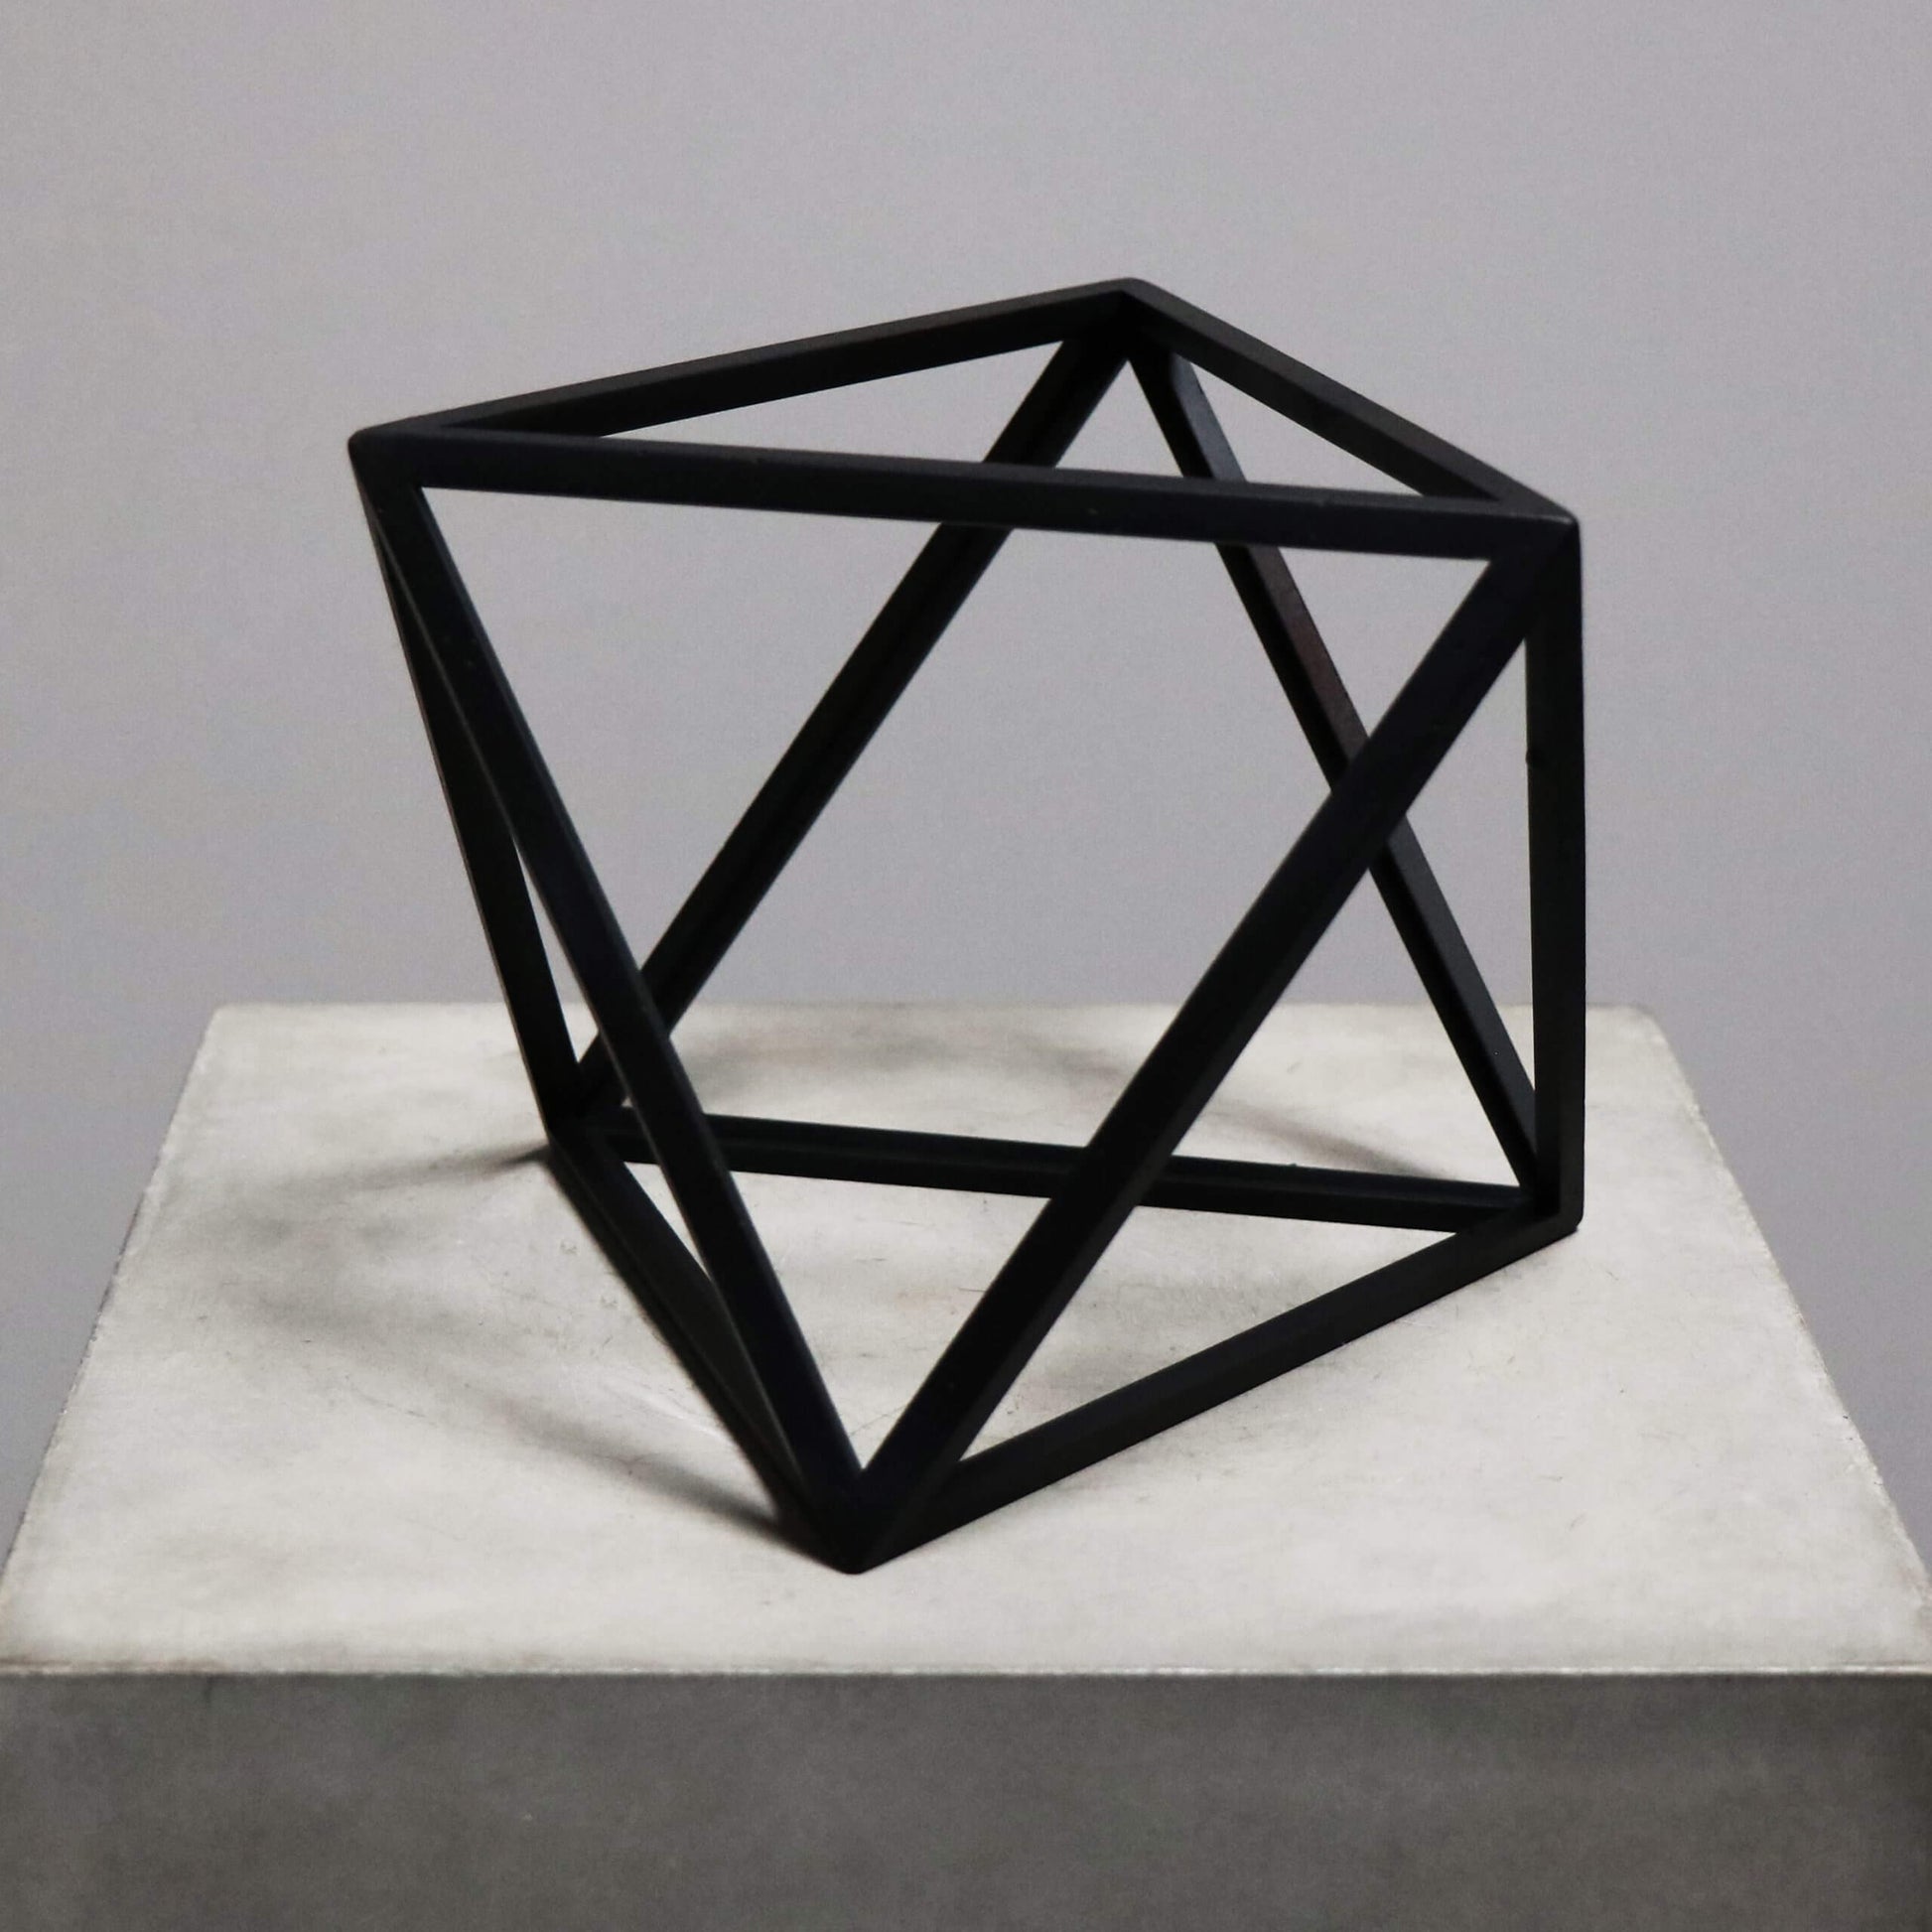 Beautiful geometrical model in burnt black wood